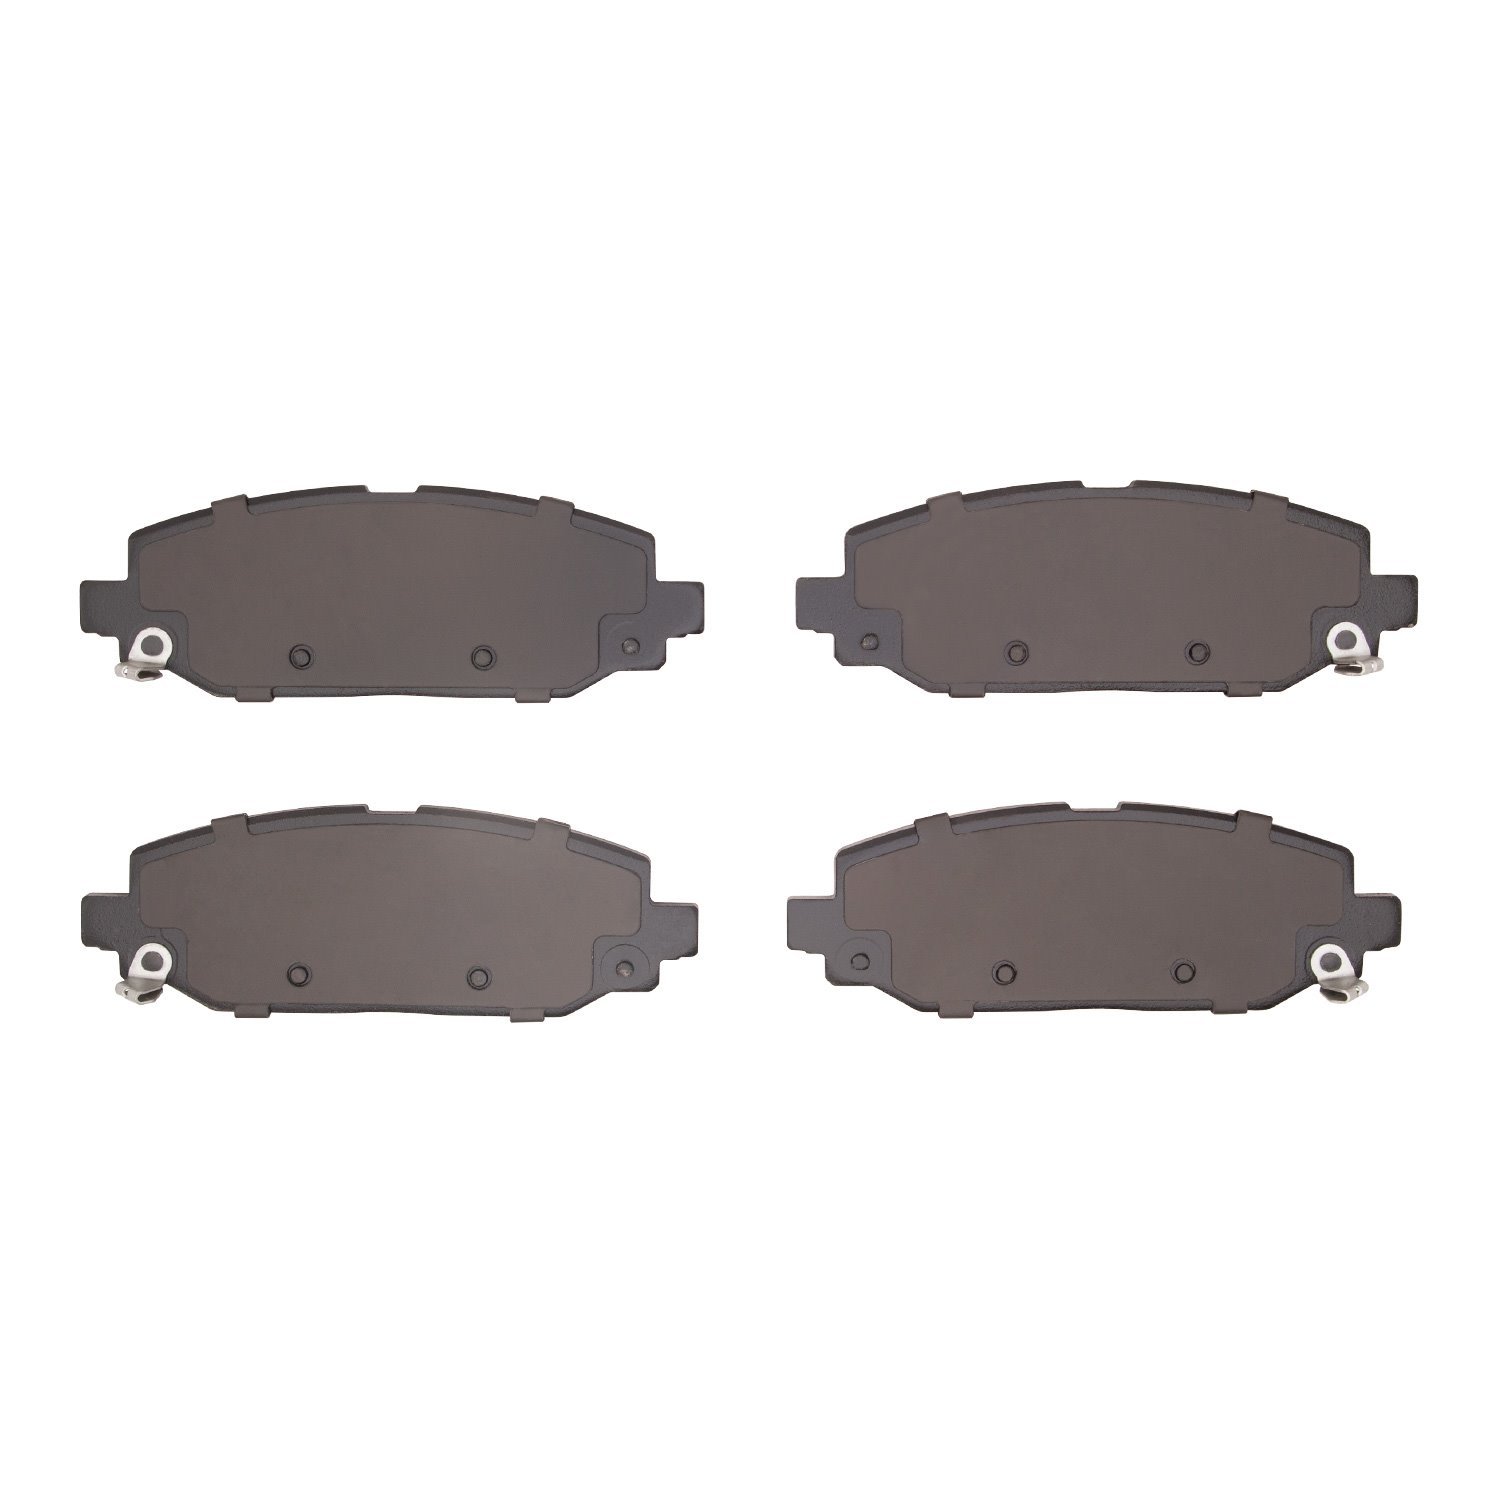 1310-2186-00 3000-Series Ceramic Brake Pads, Fits Select Mopar, Position: Rear